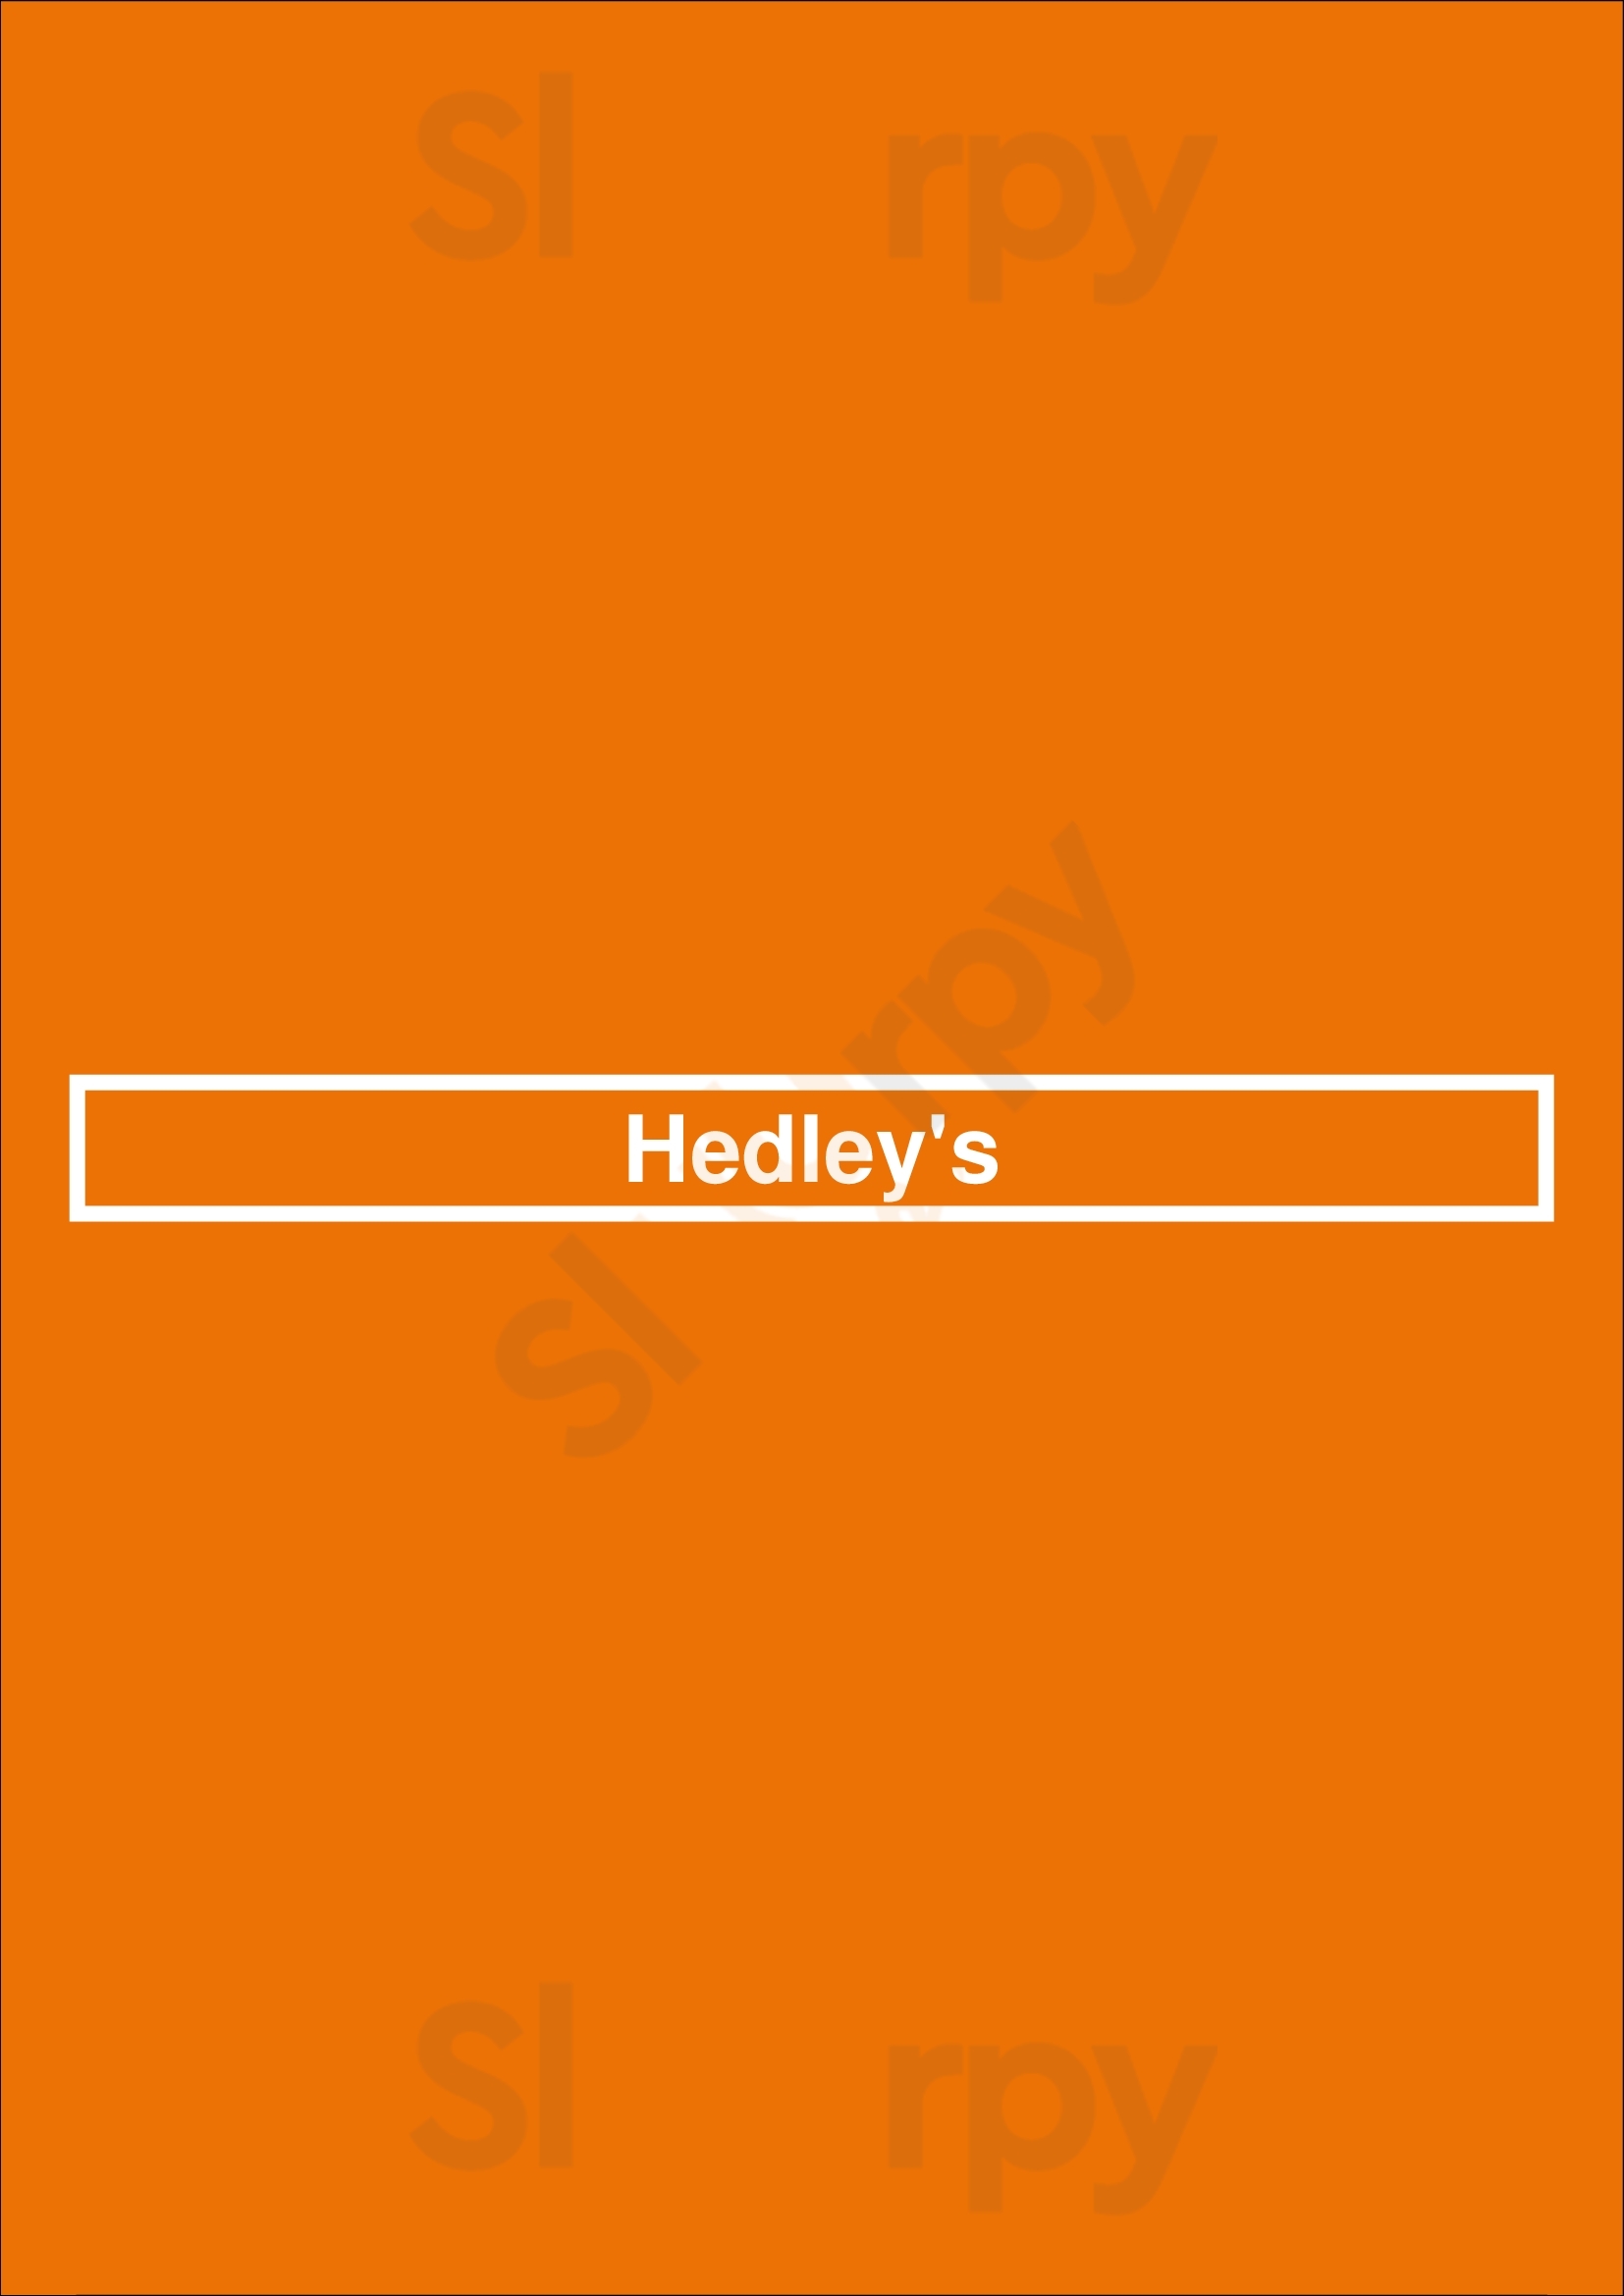 Hedley's Los Angeles Menu - 1